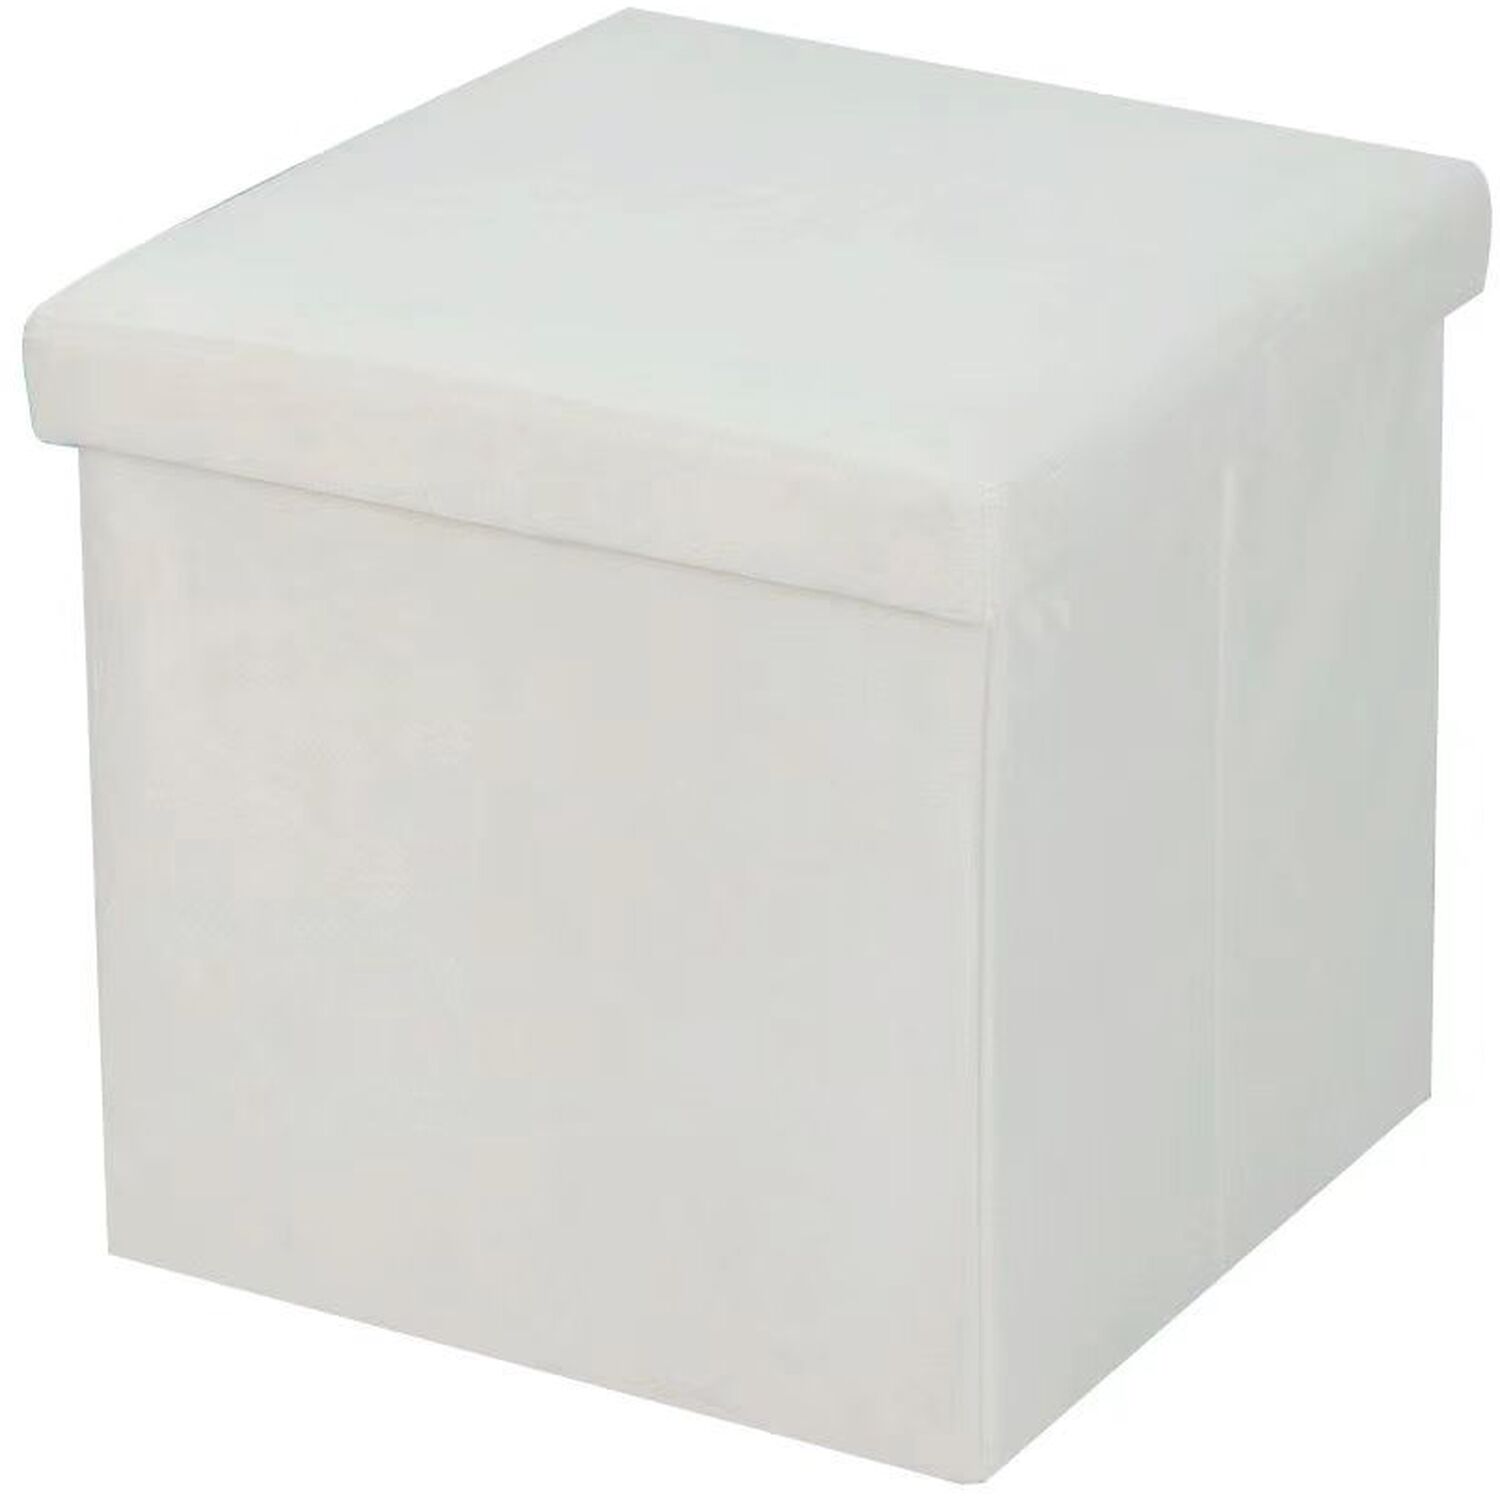 Cream Seville Crushed Velvet Cube Ottoman Storage Box Image 1